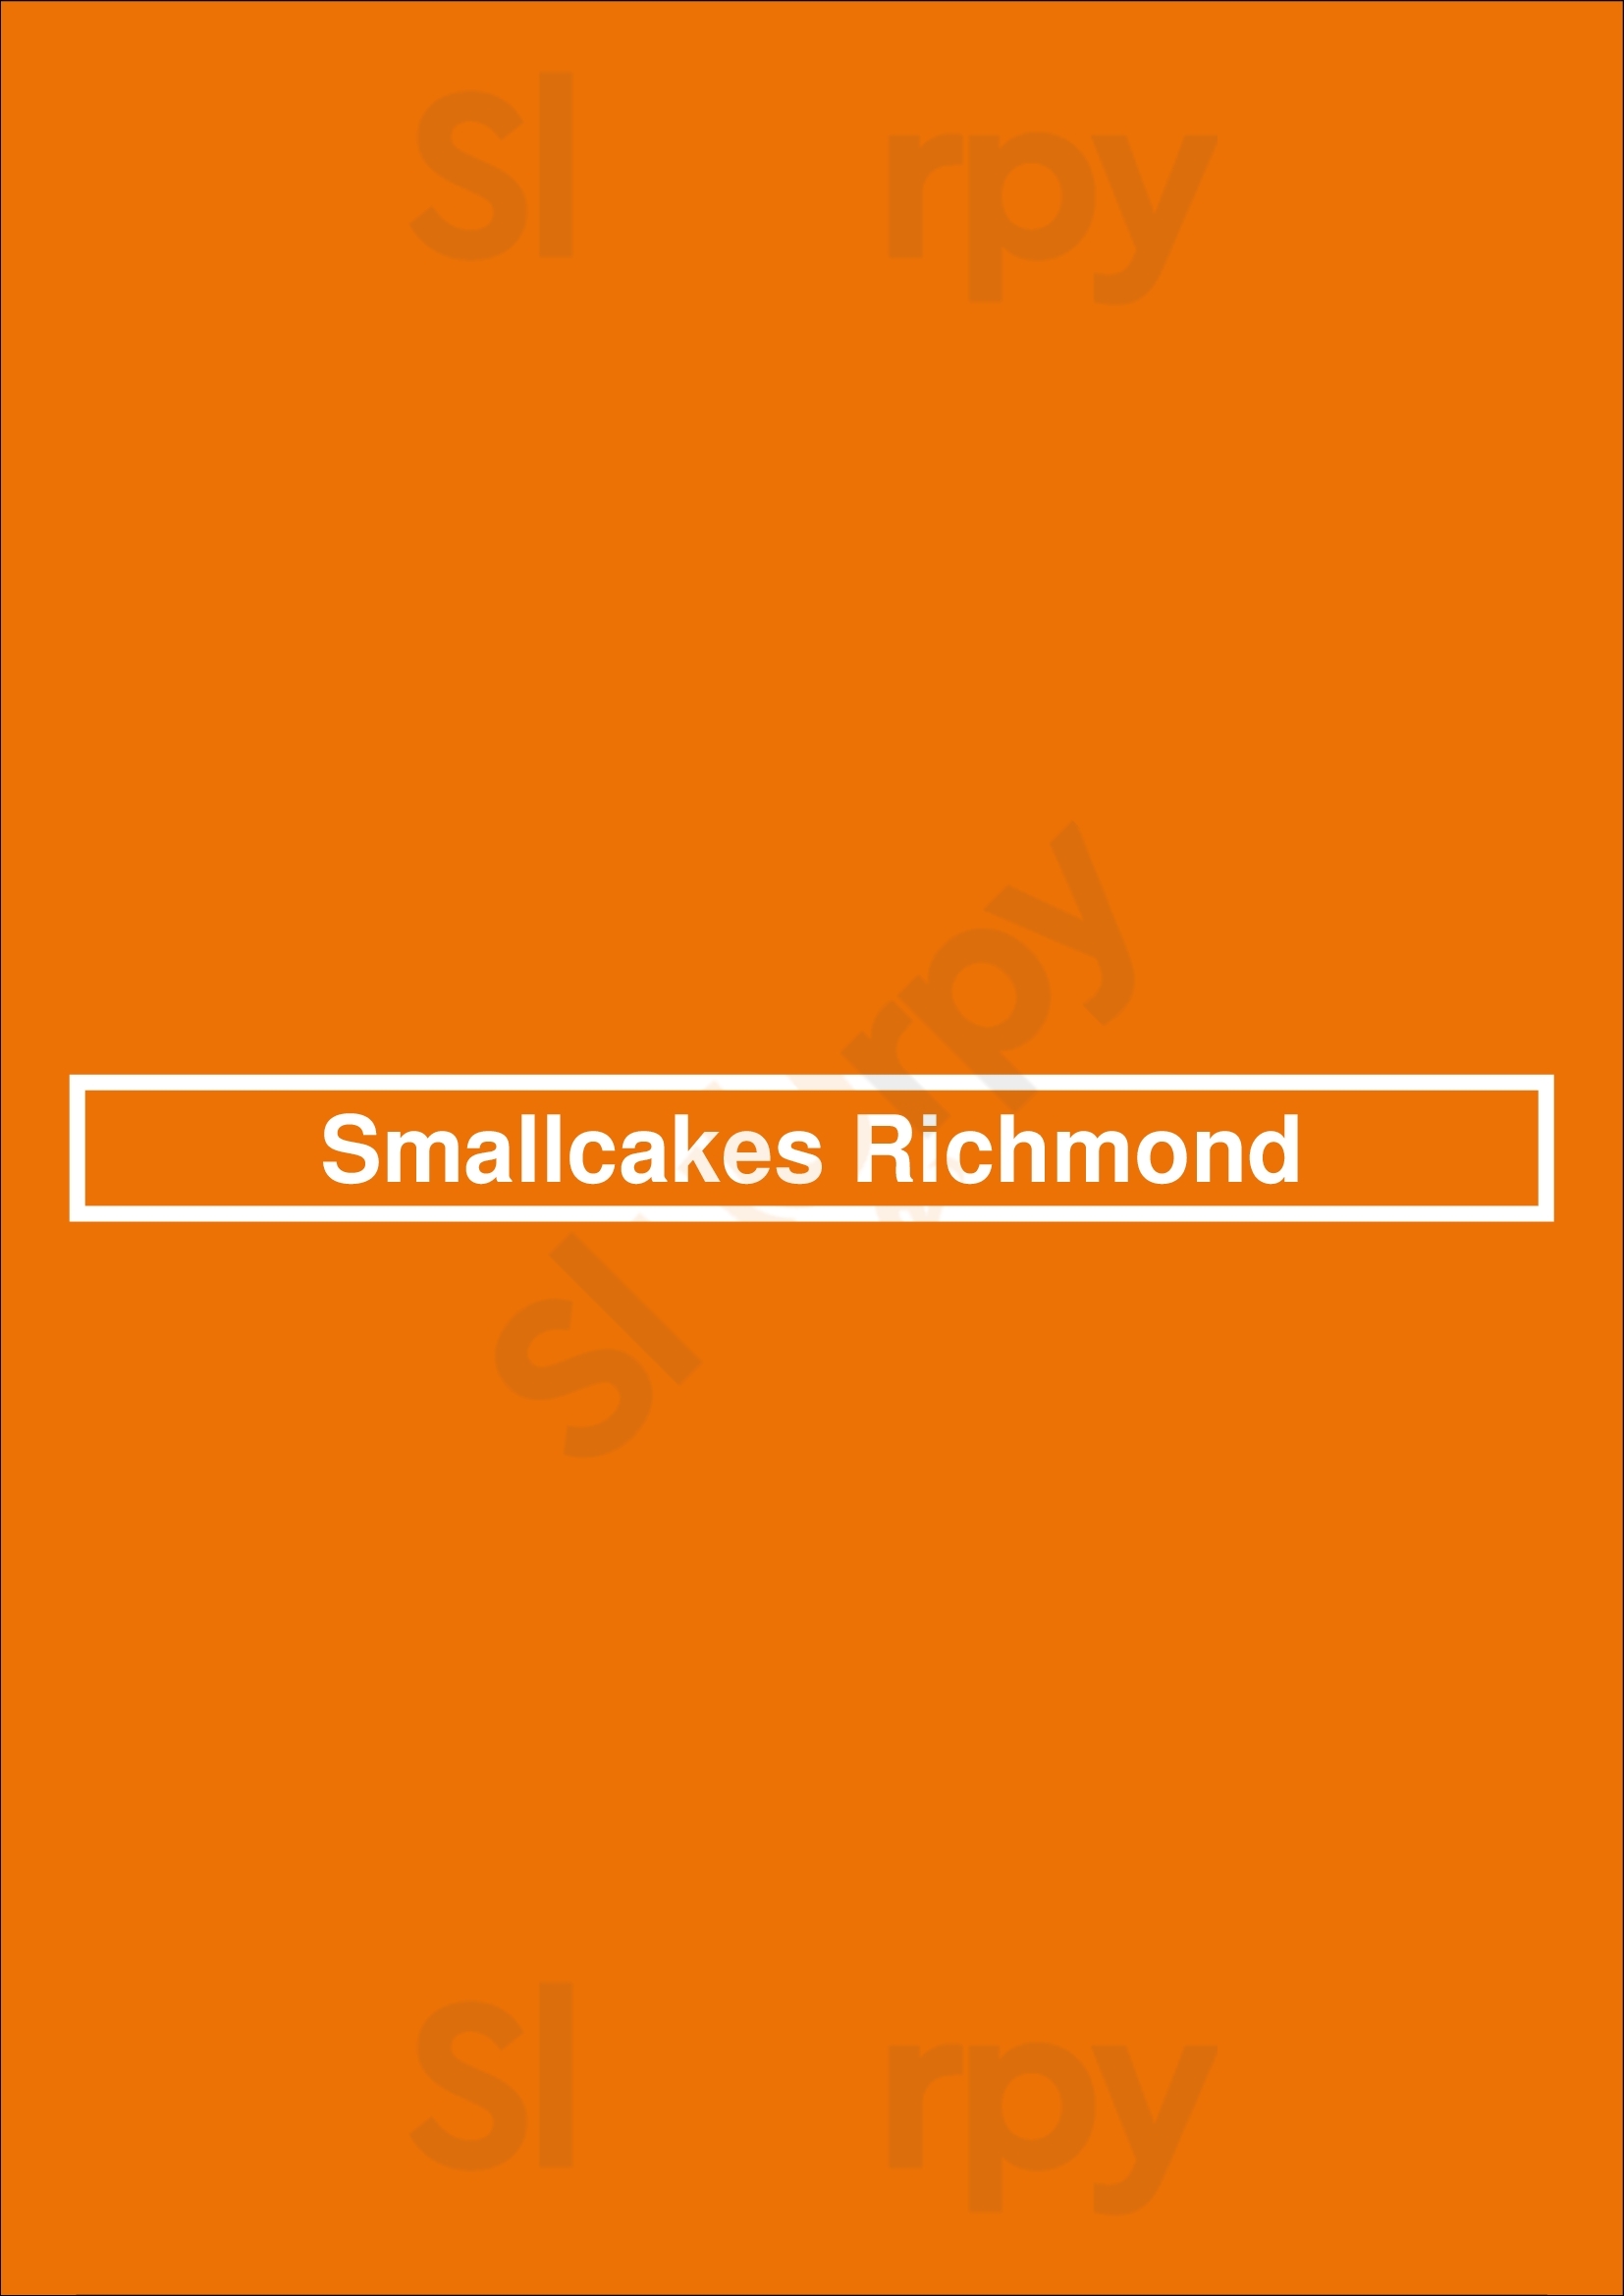 Smallcakes Richmond Richmond Menu - 1